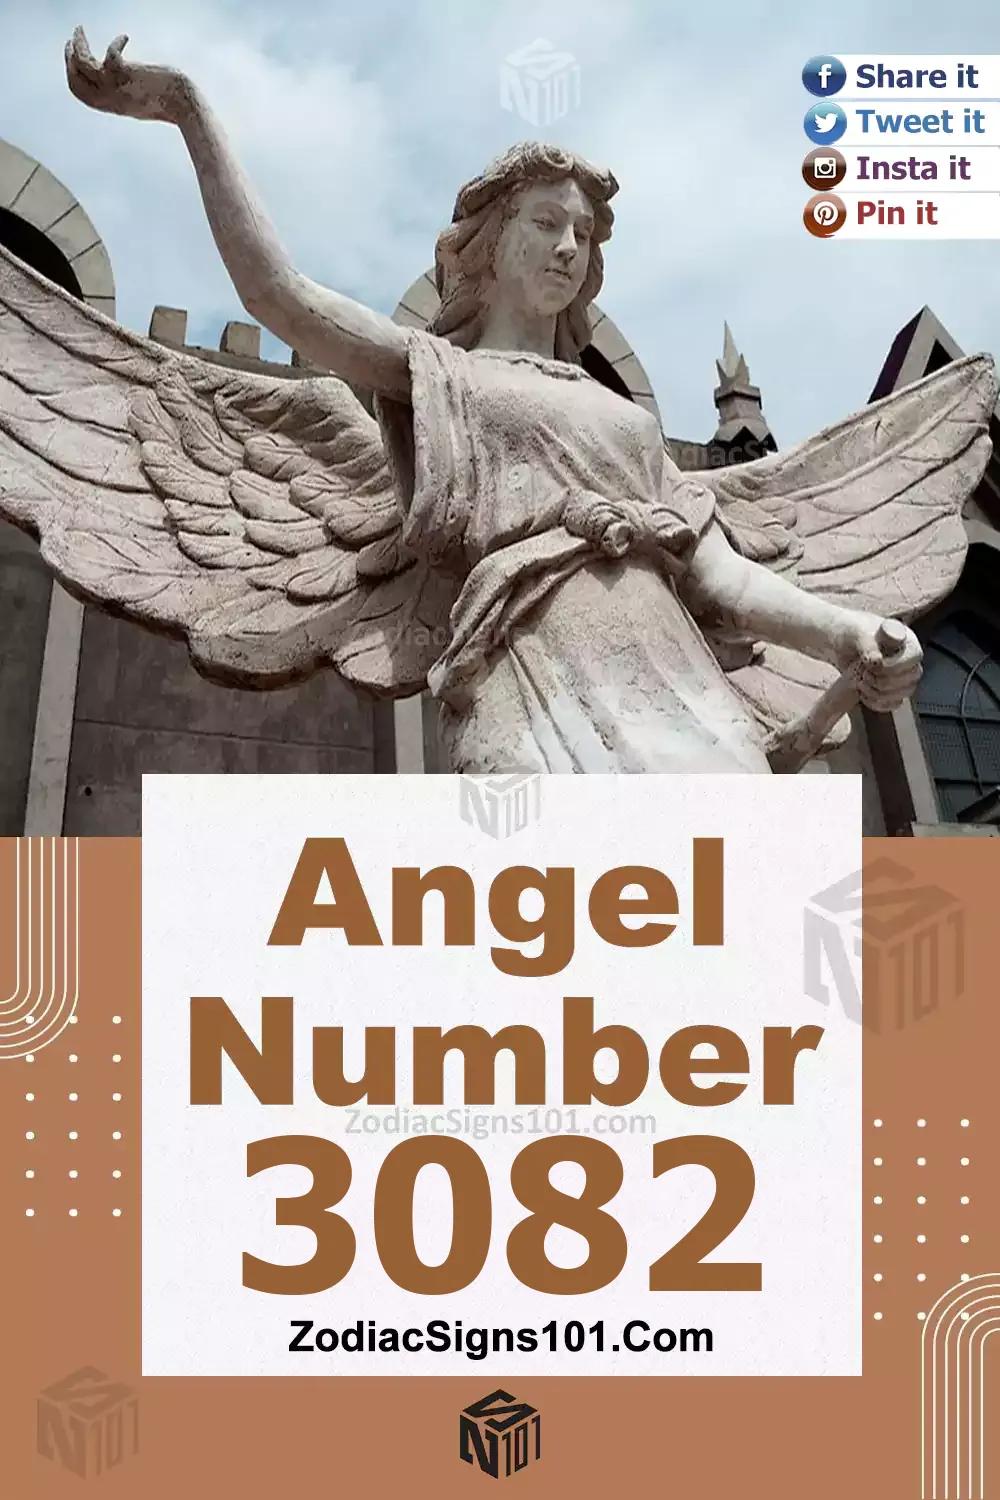 3082-Angel-Number-Meaning.jpg